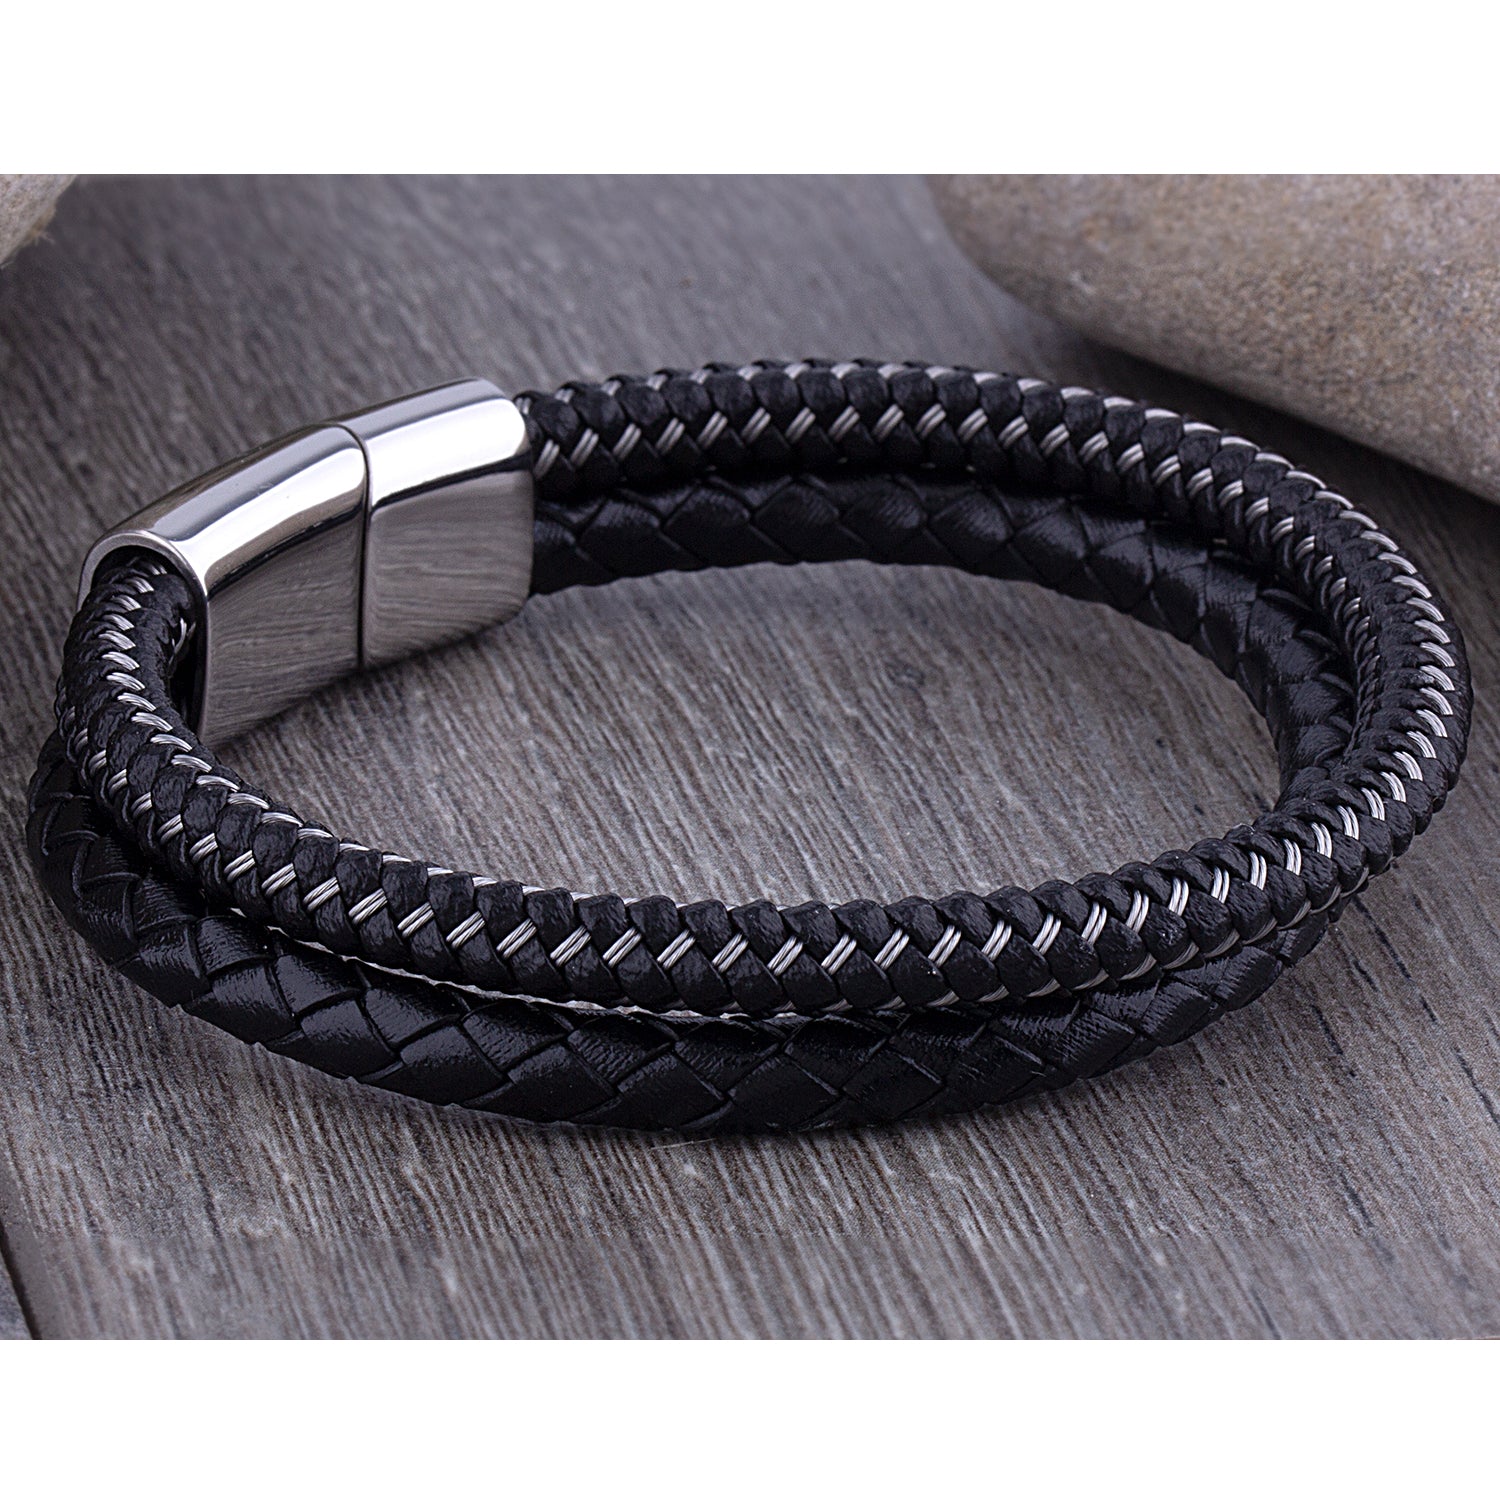 Buy Mens Leather Bracelet With Rose Gold Magnetic Slide Lock Clasp